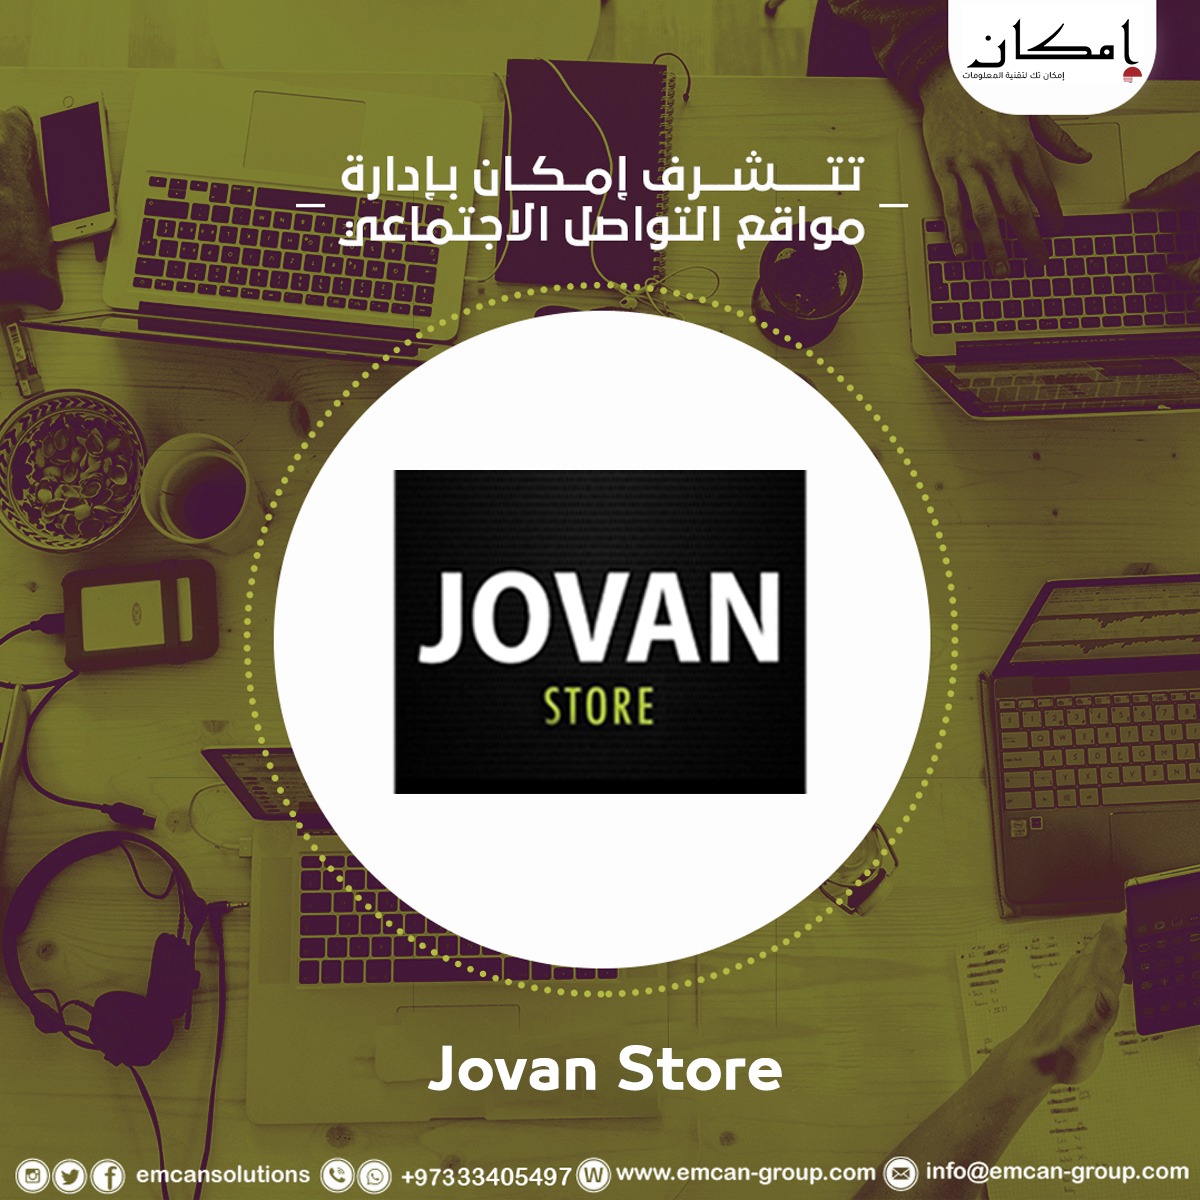 Social media management for Jovan Store